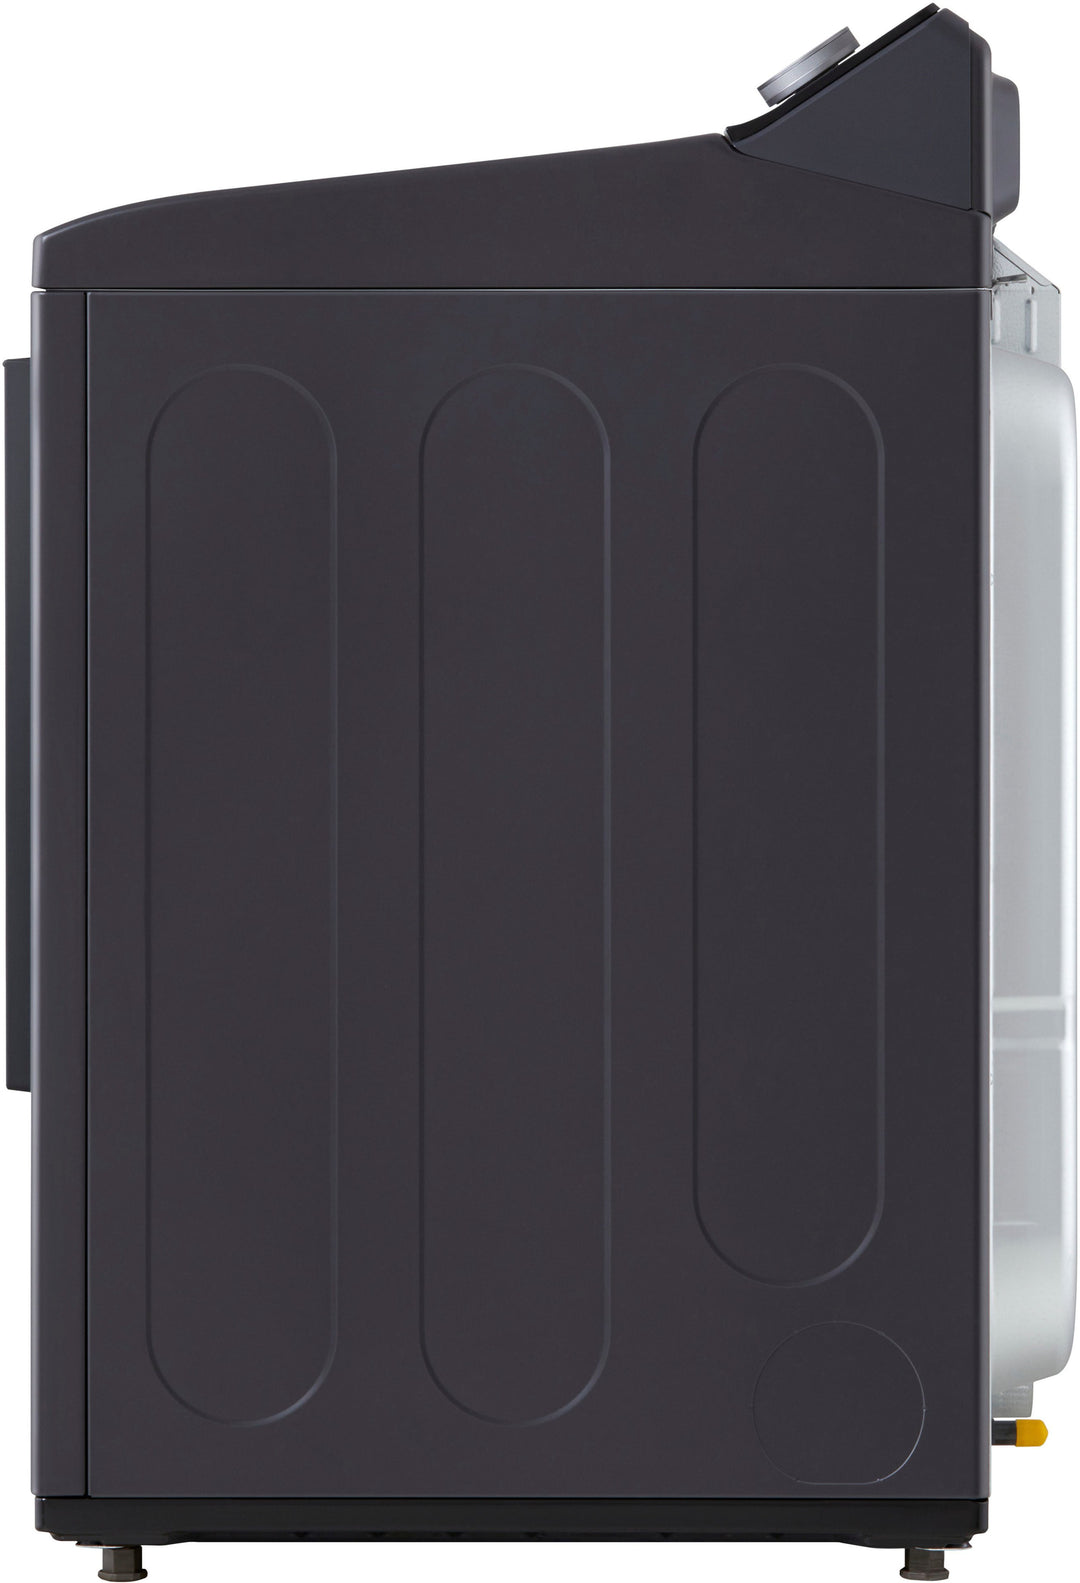 LG - 7.3 Cu. Ft. Smart Gas Dryer with Steam and EasyLoad Door - Matte Black_8